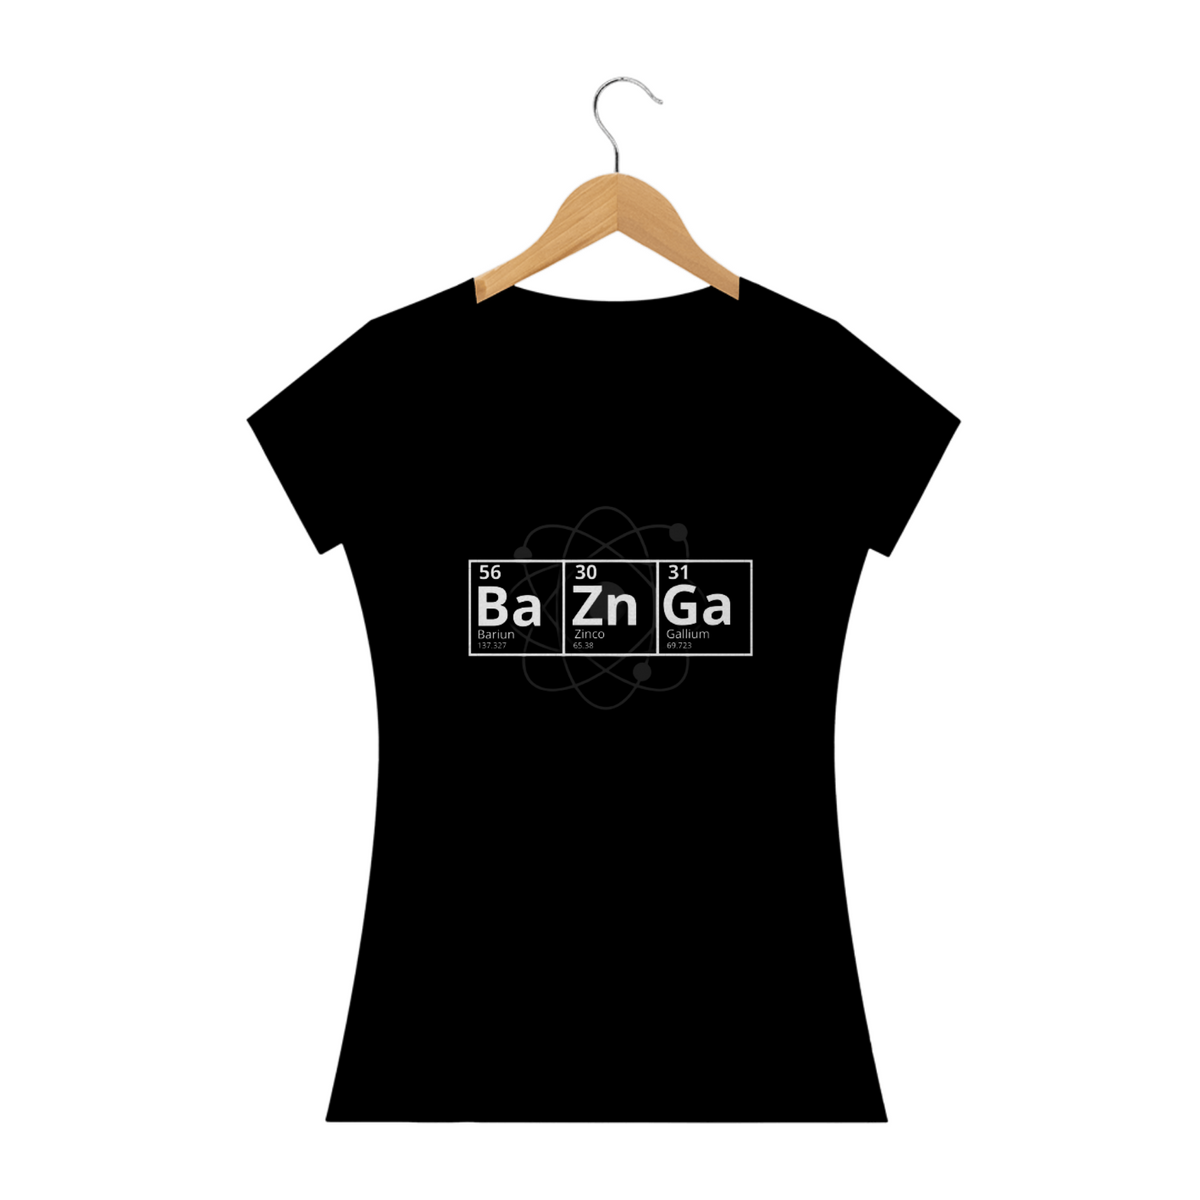 Nome do produto: Camiseta Feminina - The Big Bang Theory (Bazinga)